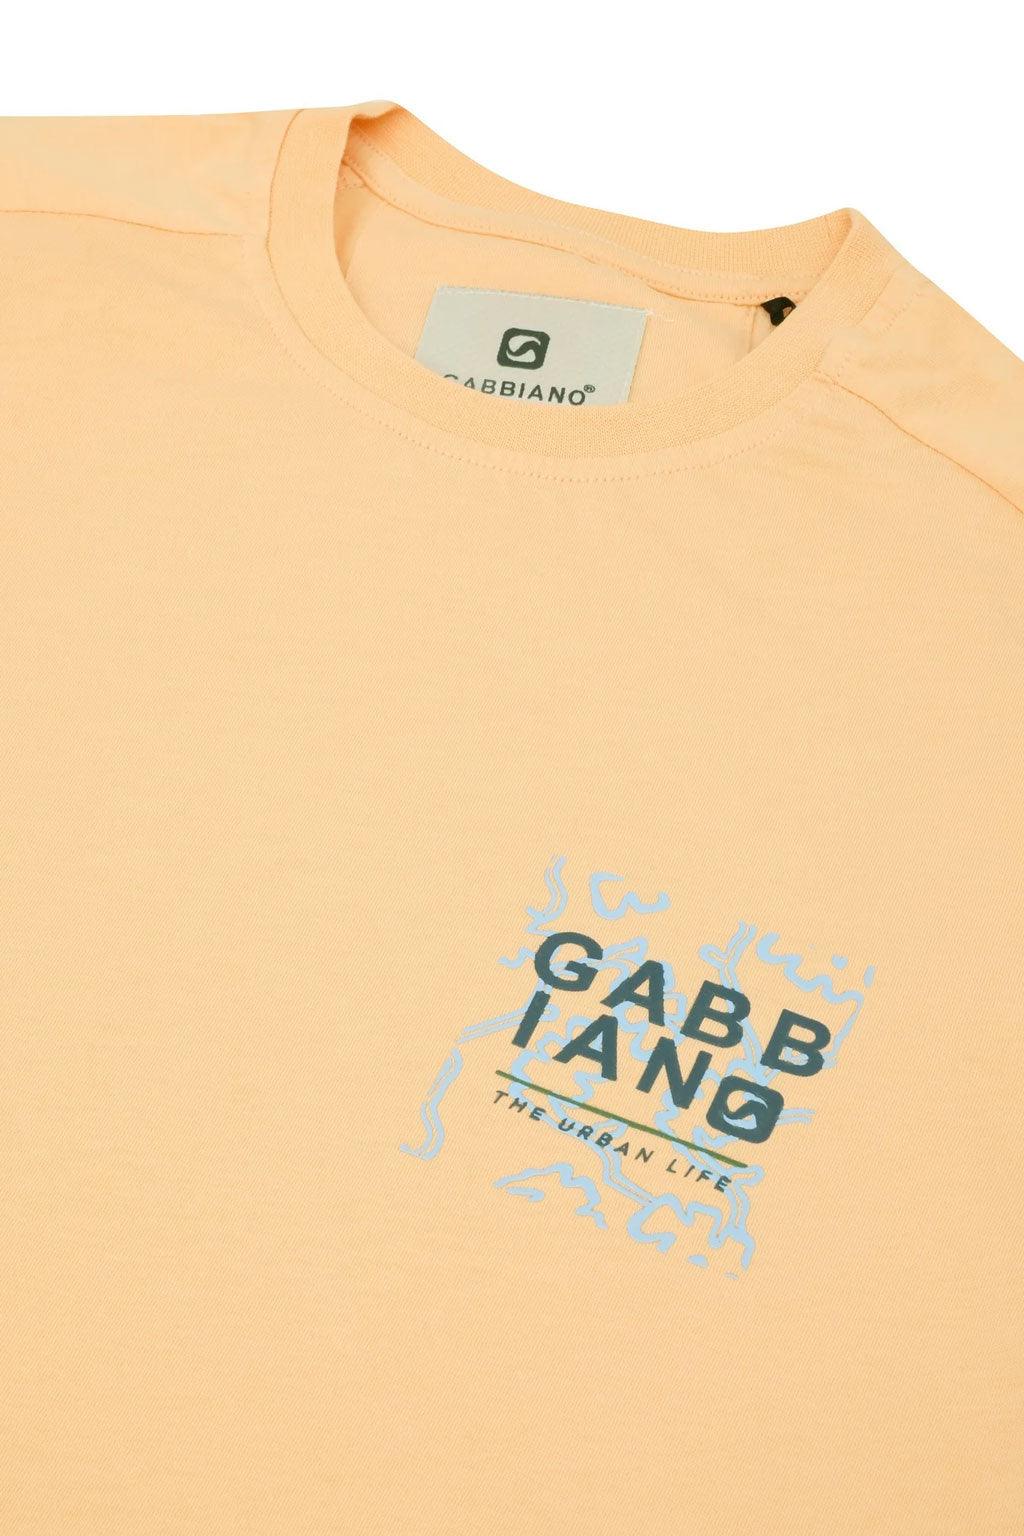 Gabbiano t-shirt - Big Boss | the menswear concept